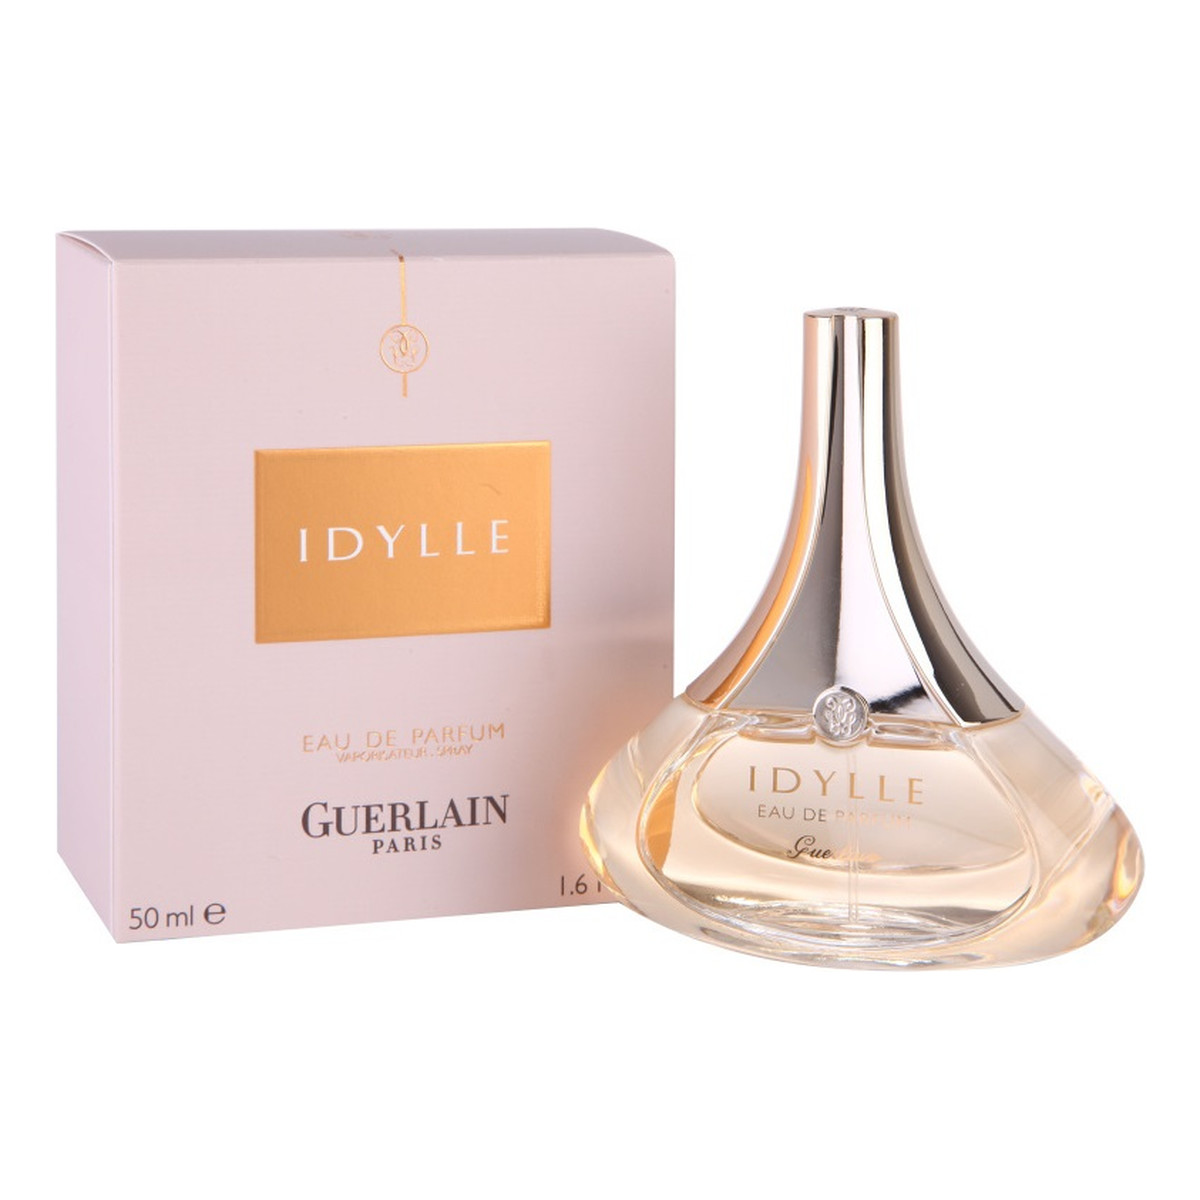 Guerlain Idylle woda perfumowana dla kobiet 50ml